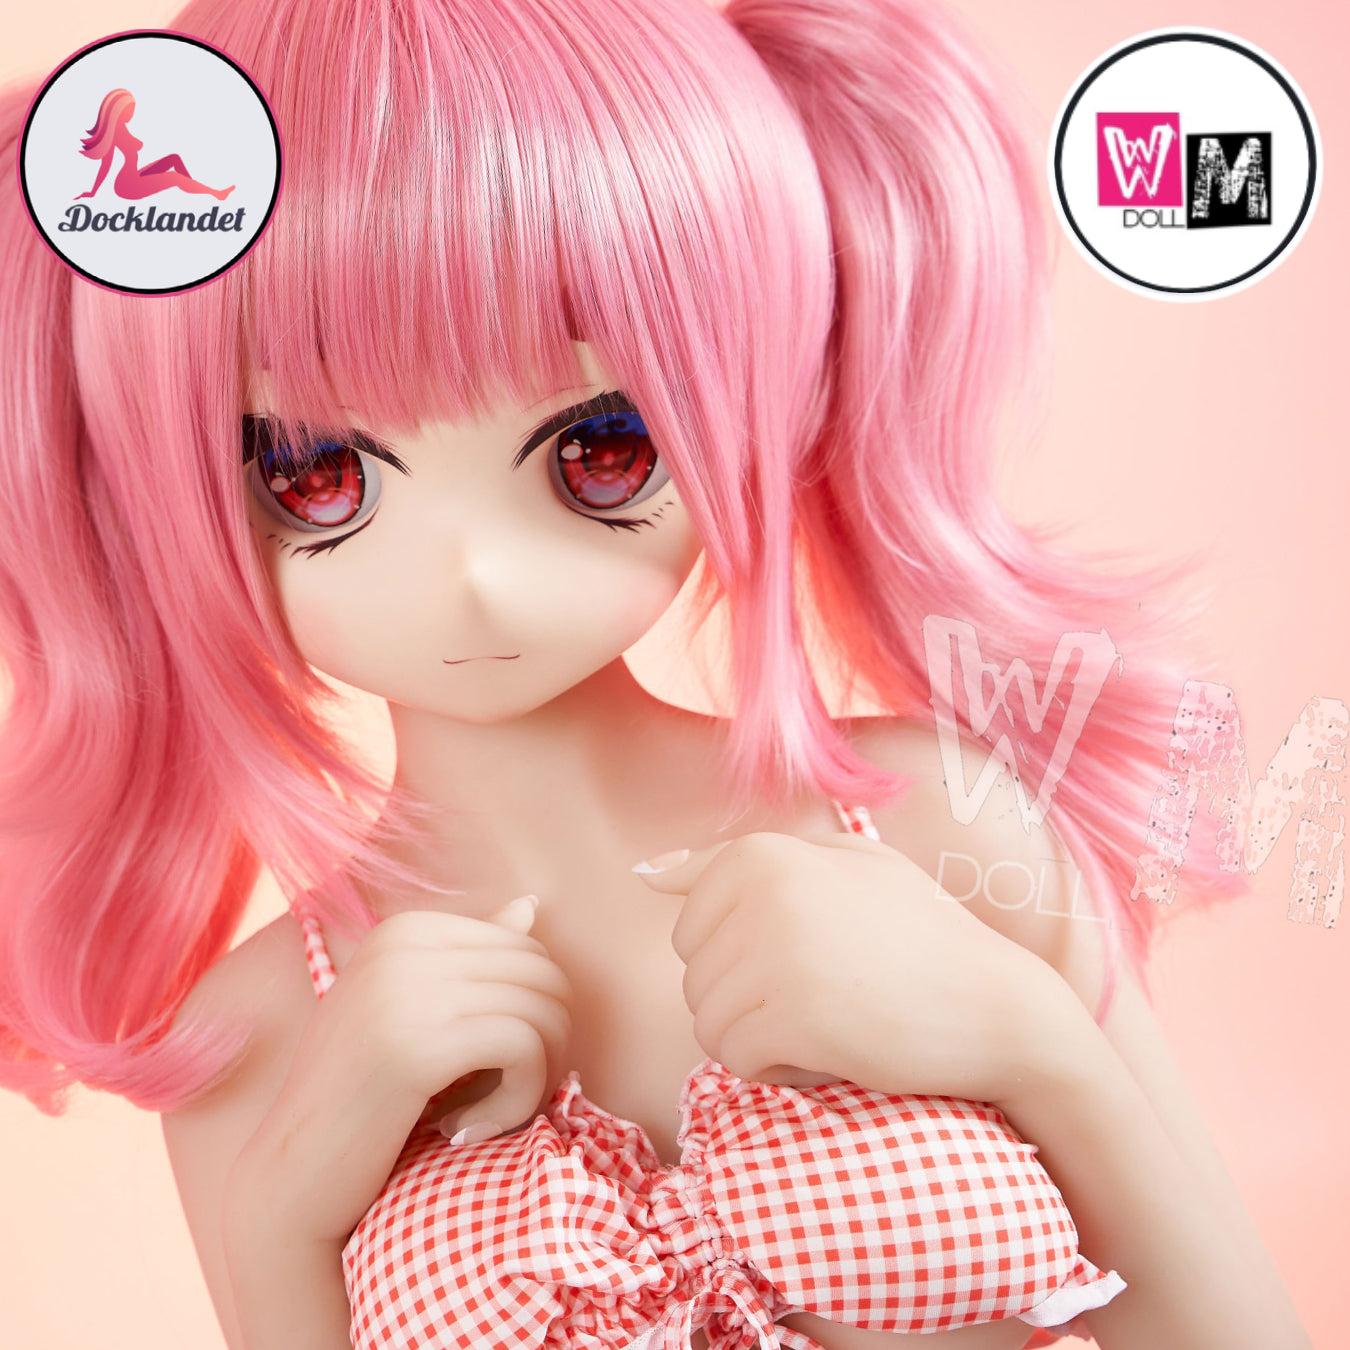 Anime sexdoll WM-Doll manga real doll. 